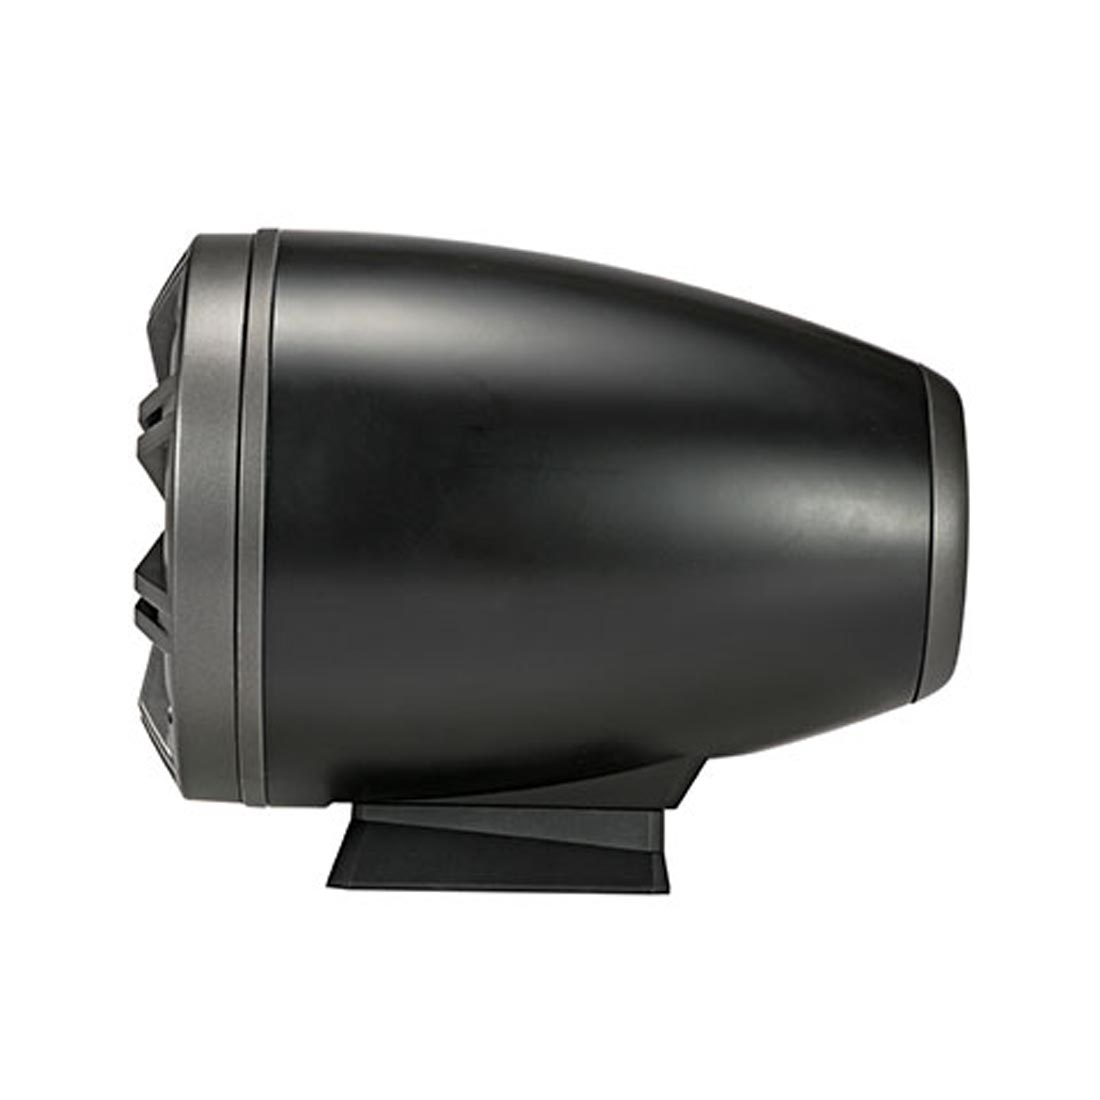 Kicker 46KMFC65 6.5" Coaxial Tower Marine Speakers – Charcoal Black